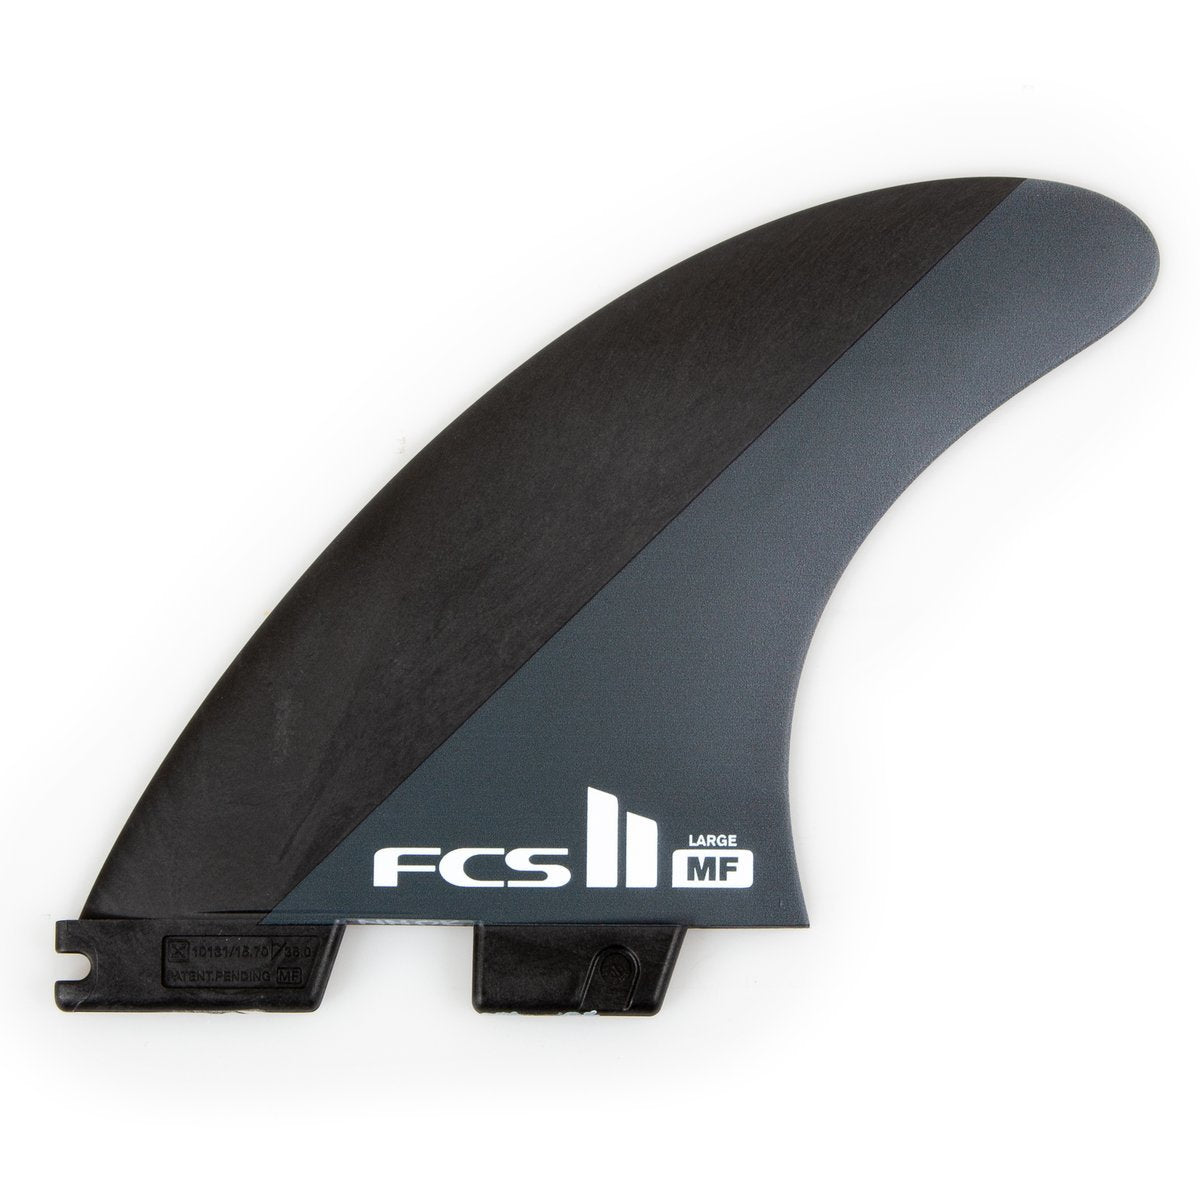 FCS II MF Neo Carbon Black/White Tri Fins - Large